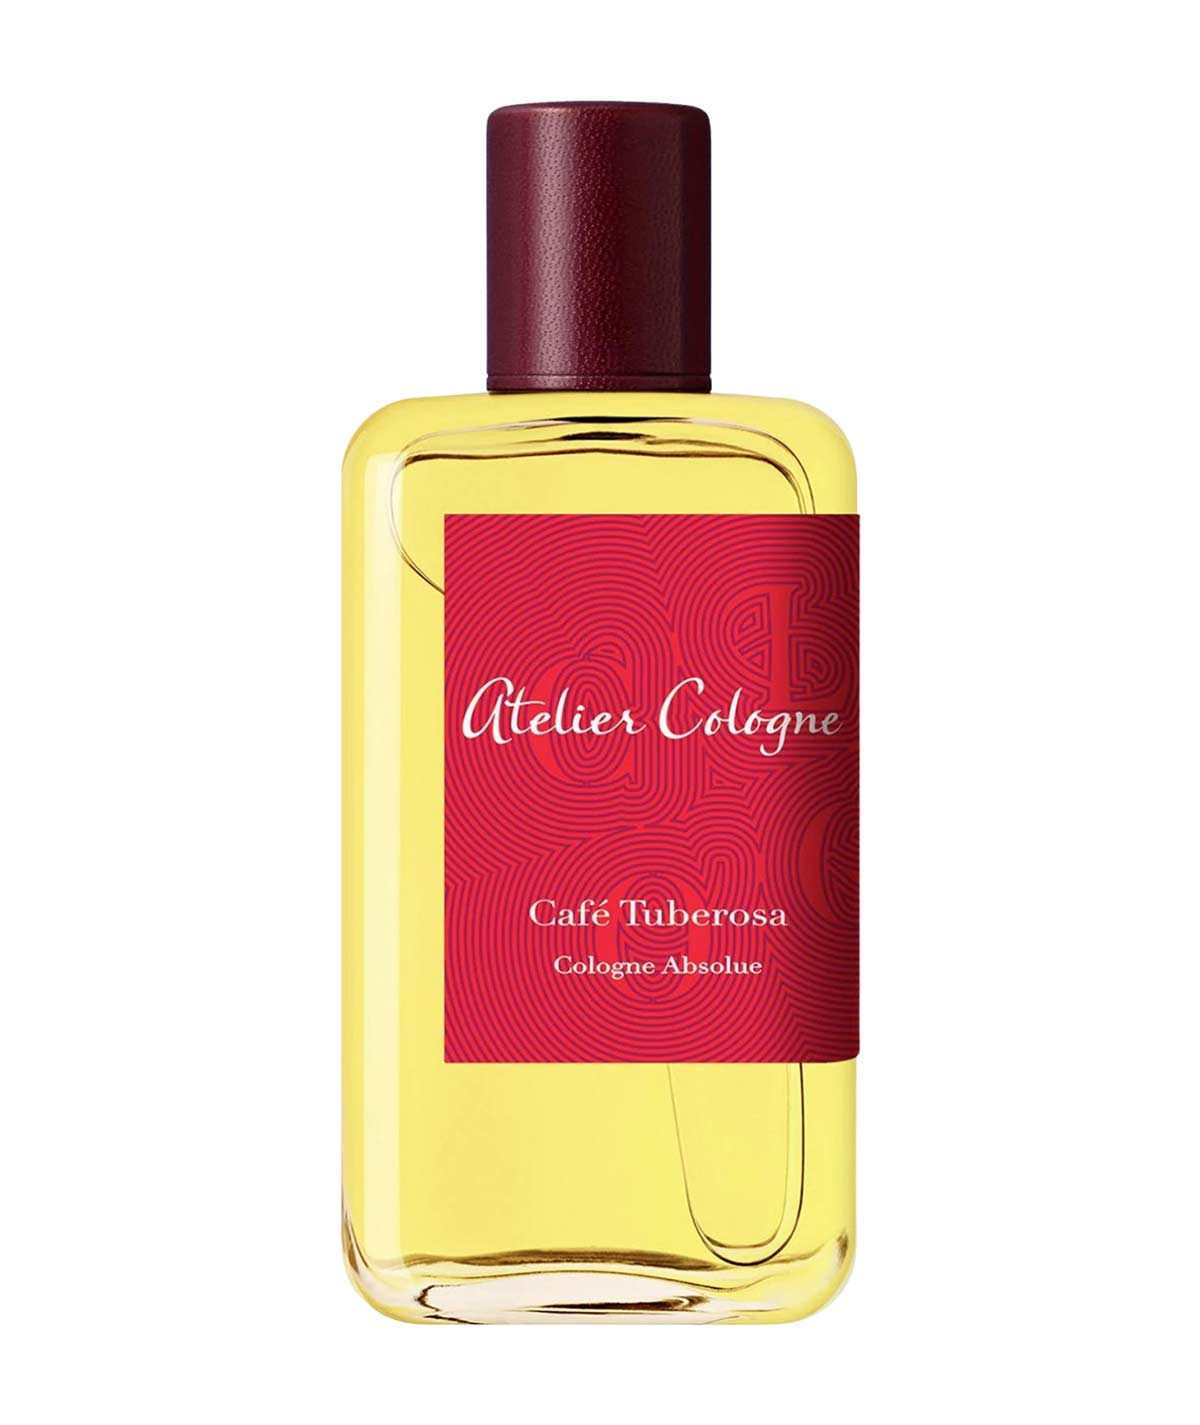 Best Atelier Cologne Fragrances - FragranceReview.com